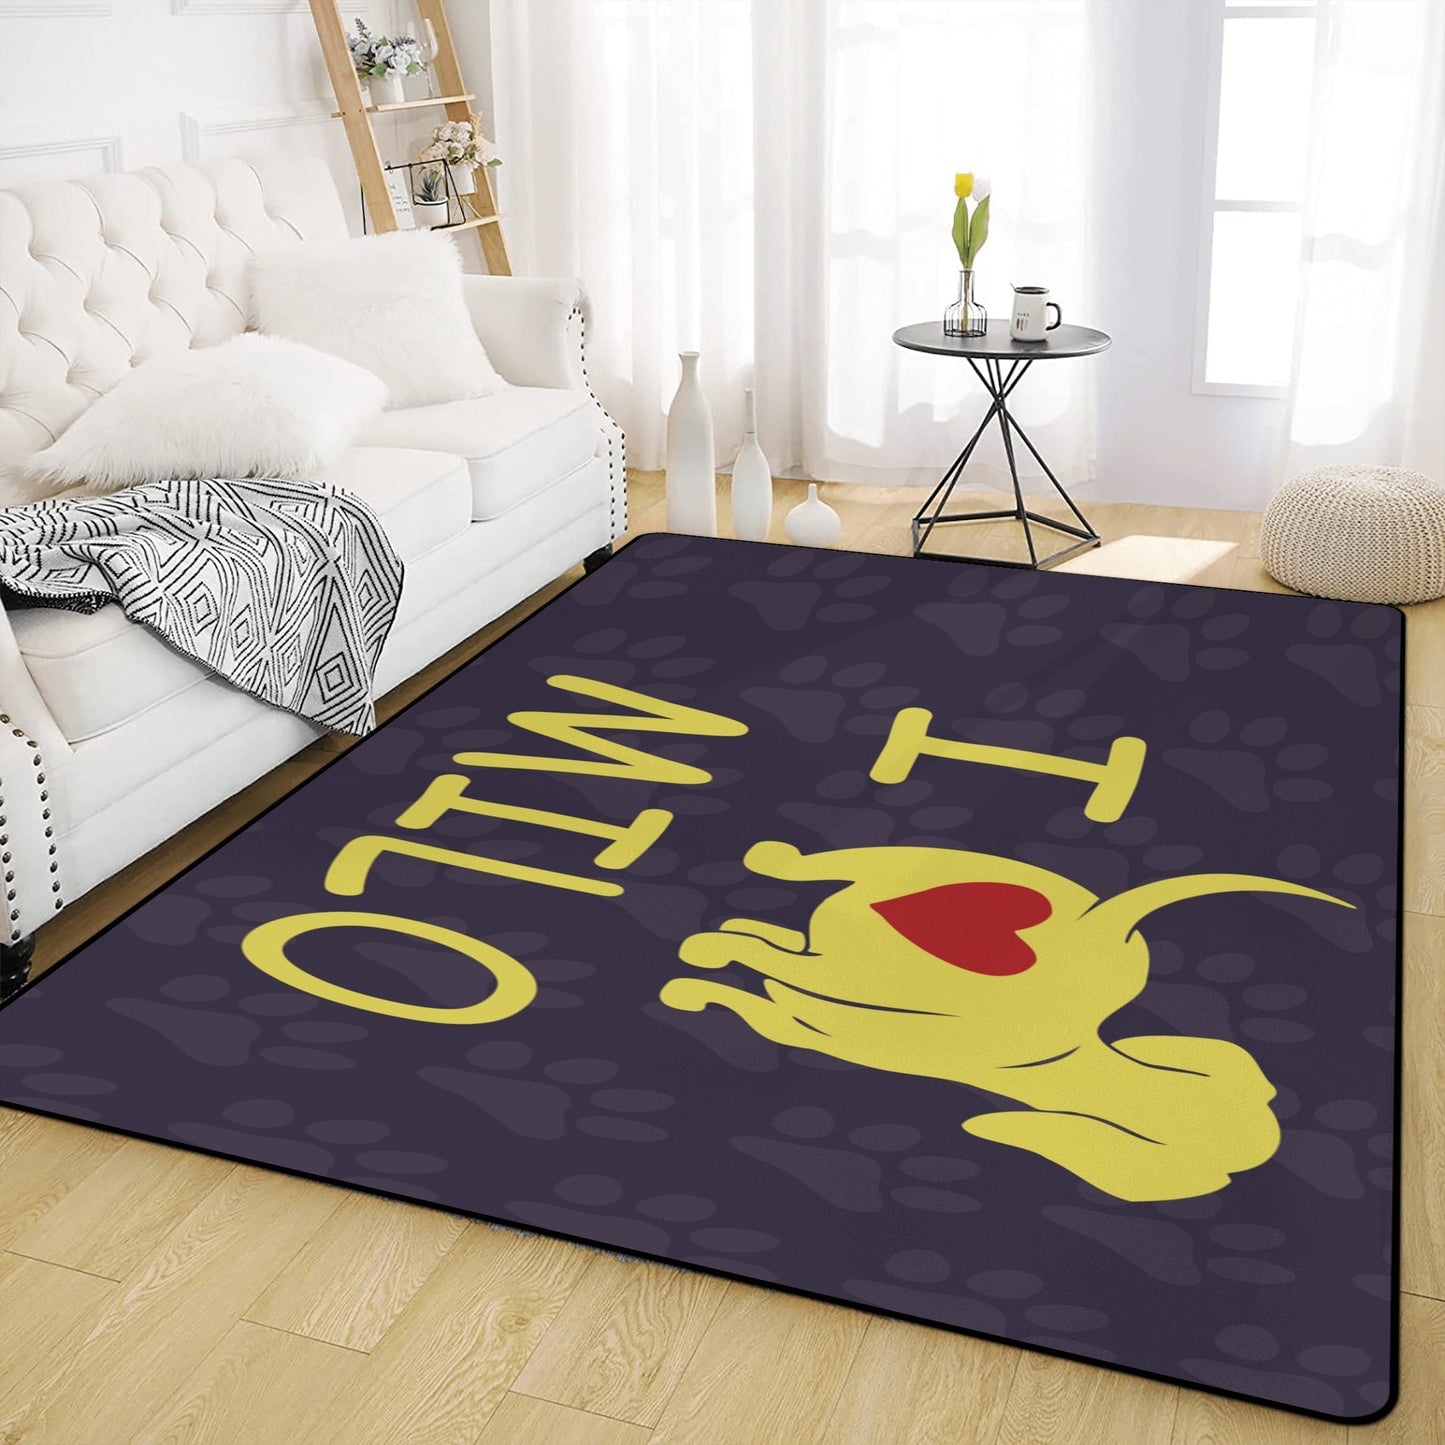 Custom Living Room Carpet Rug with dachshund Name - Living Room Carpet Rug